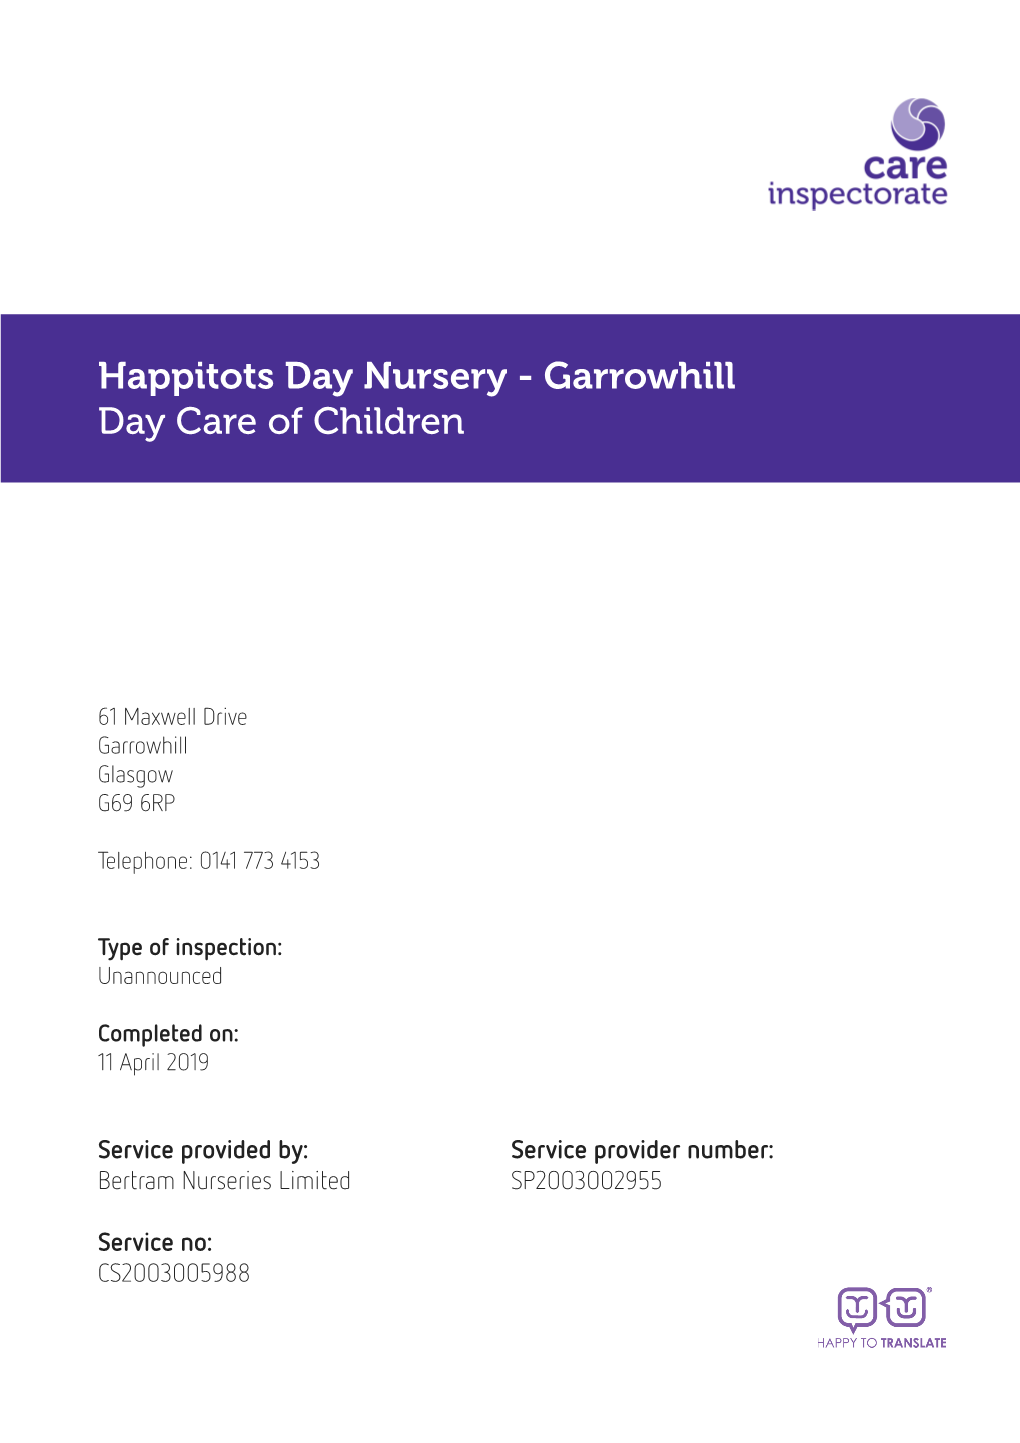 Happitots Day Nursery - Garrowhill Day Care of Children